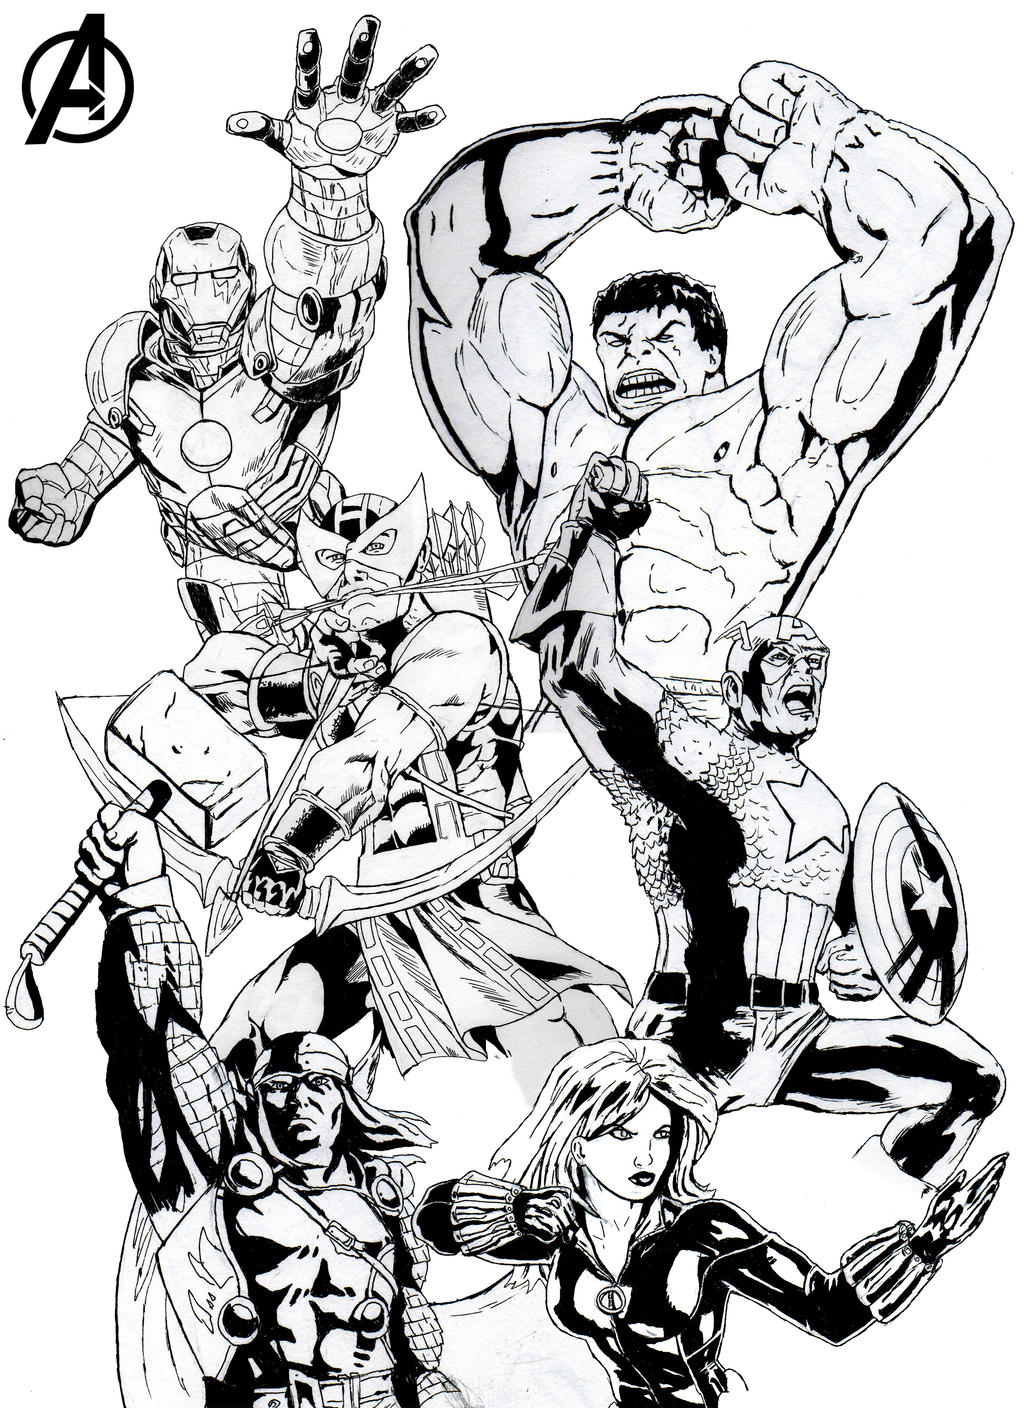 Avengers Assemble!! by Graphitodudesaul on DeviantArt